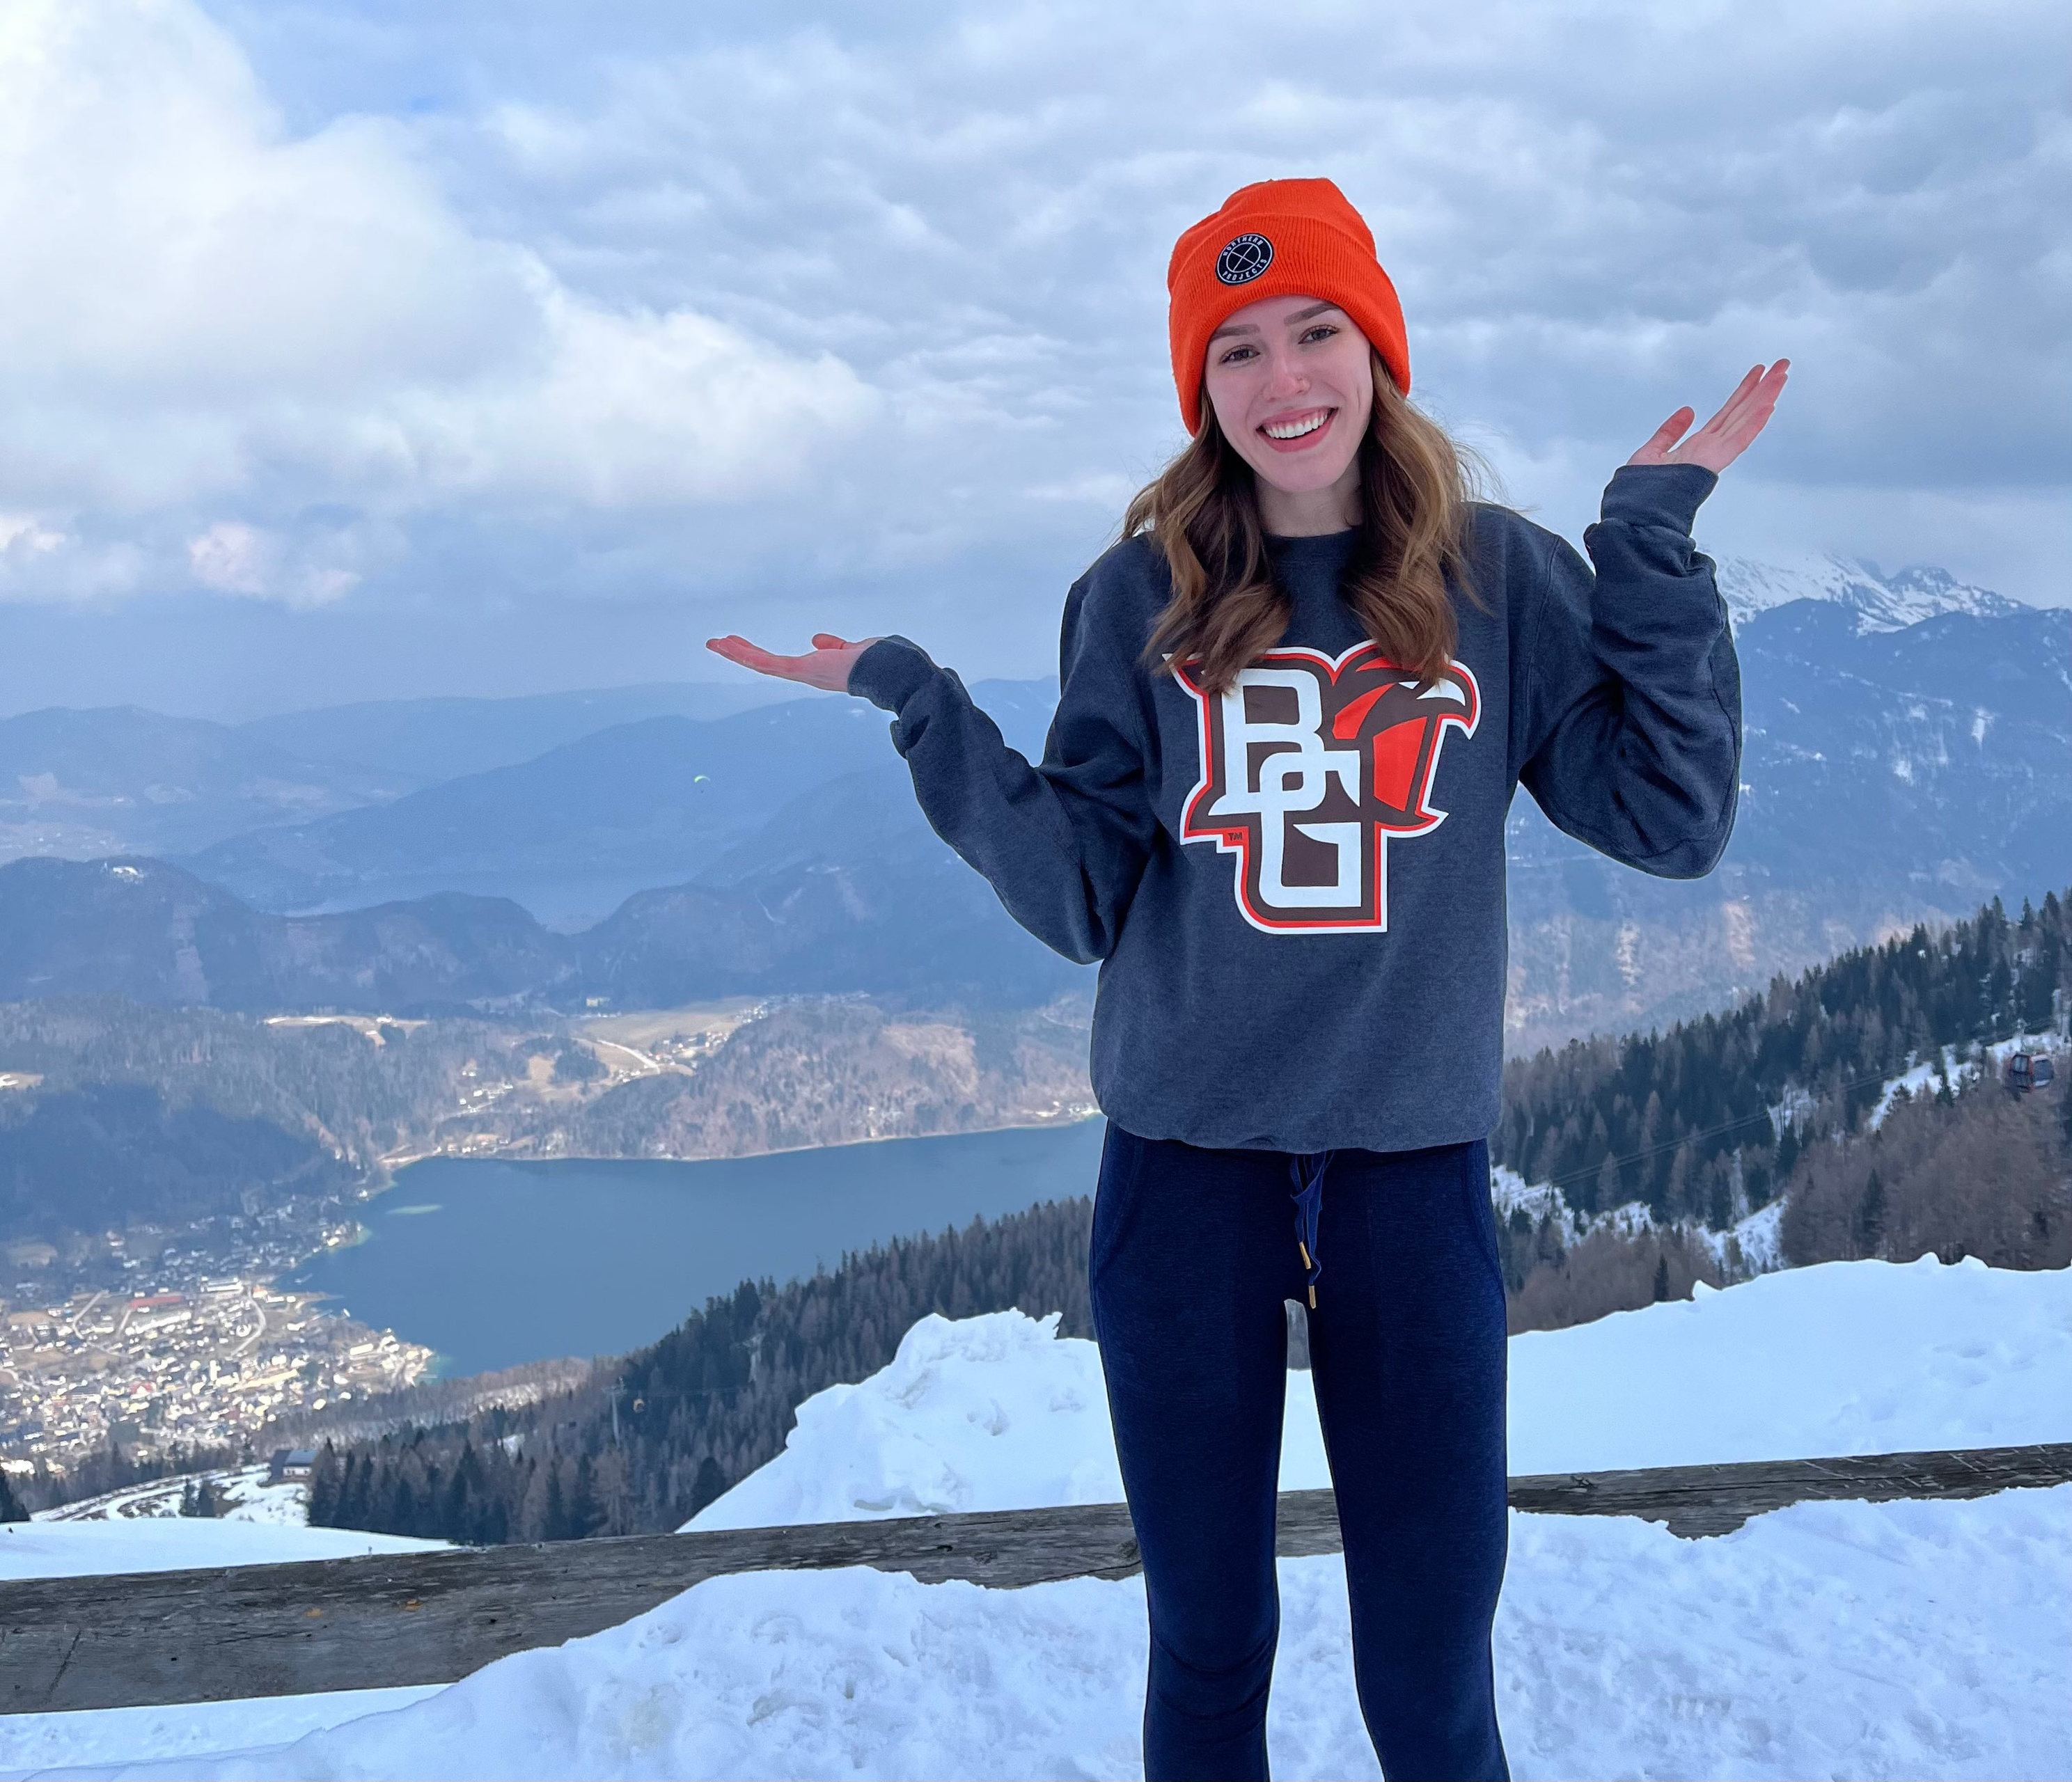 A person wearing a BGSU sweatshirt stands on a snowy mountaintop.